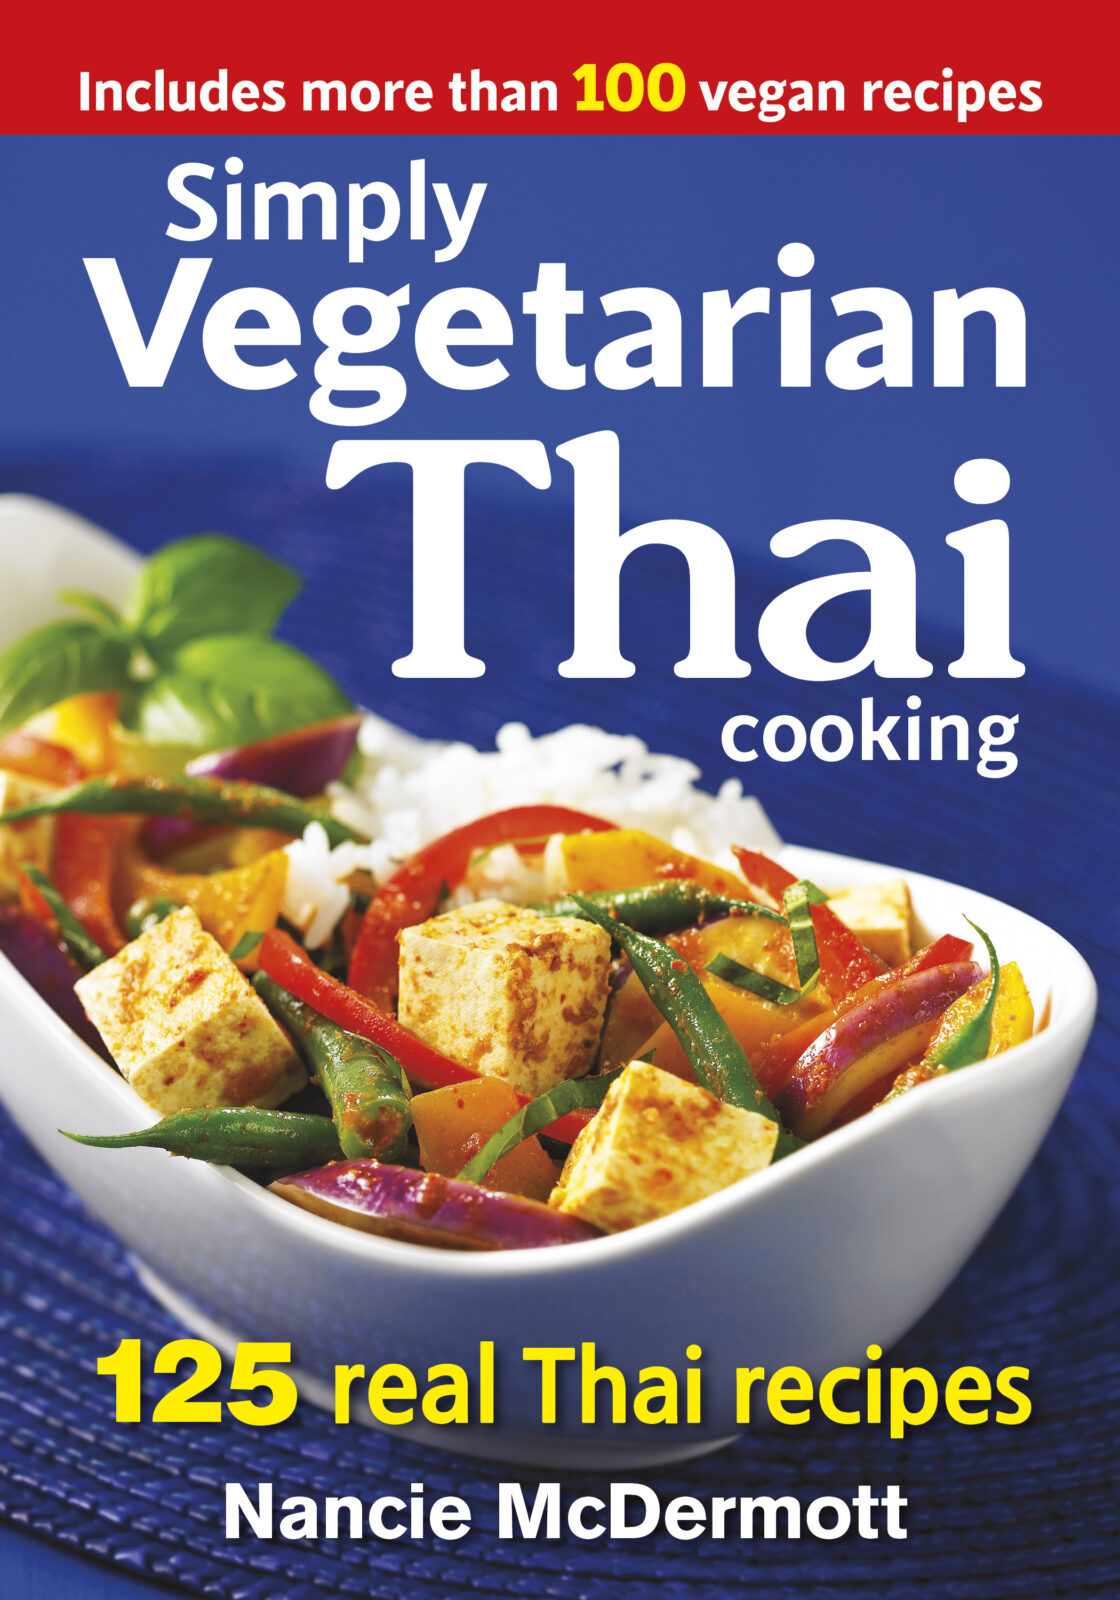 Simply Vegetarian Thai Cooking